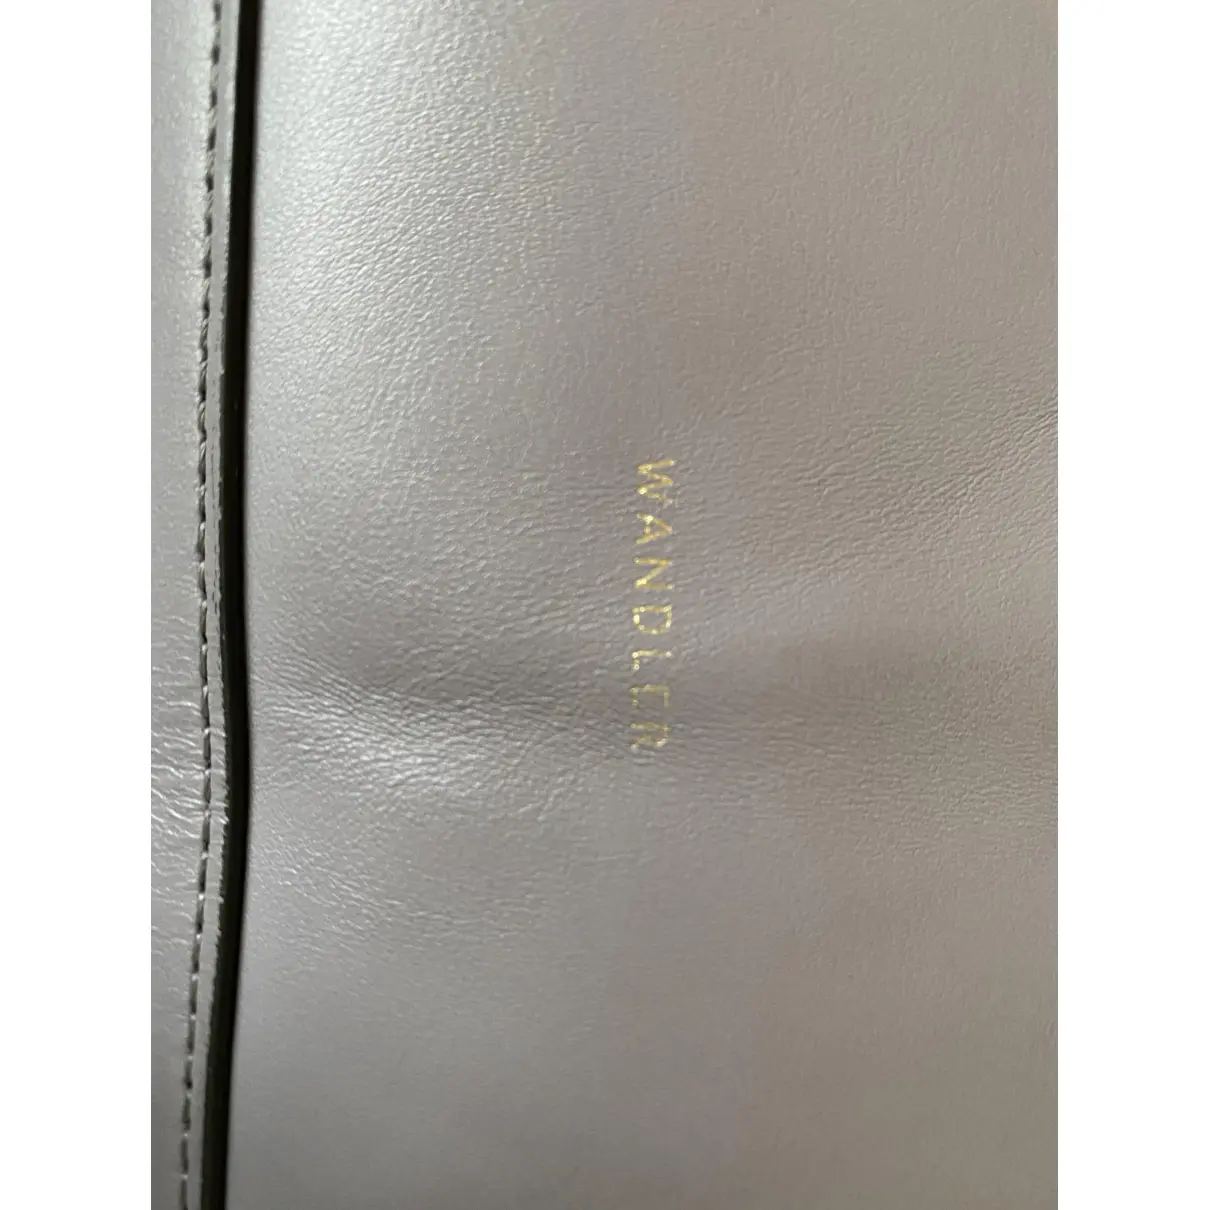 Buy Wandler Leather handbag online